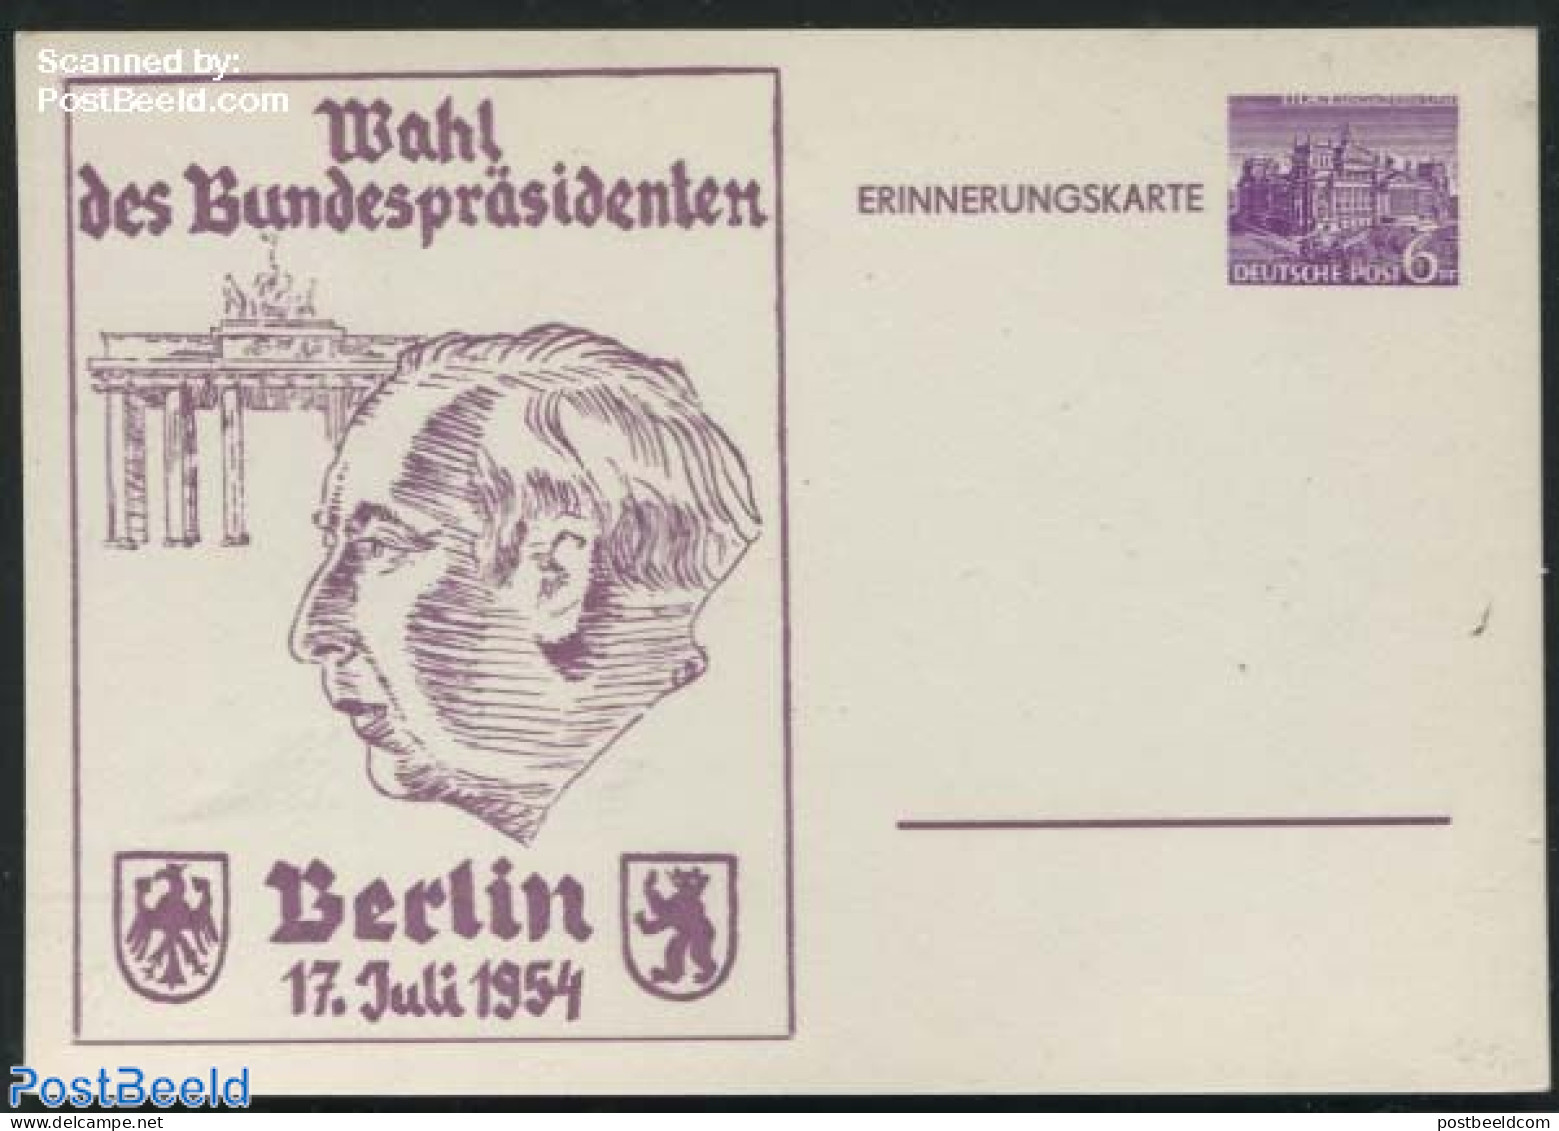 Germany, Berlin 1954 Postcard 6pf, Presidential Elections, Unused Postal Stationary - Brieven En Documenten